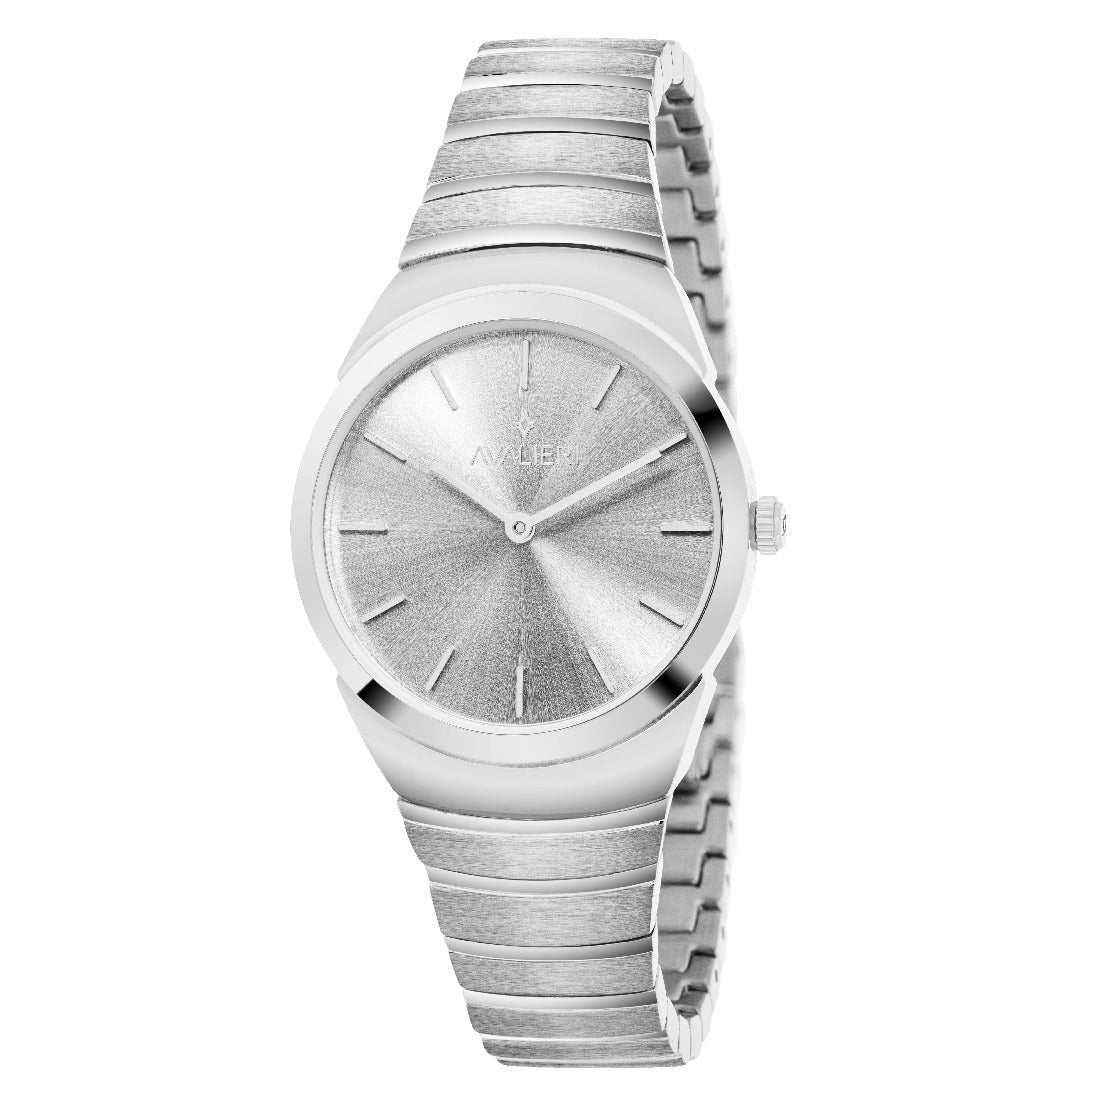 Avalieri Women's Quartz Watch Silver Dial - AV-2559B